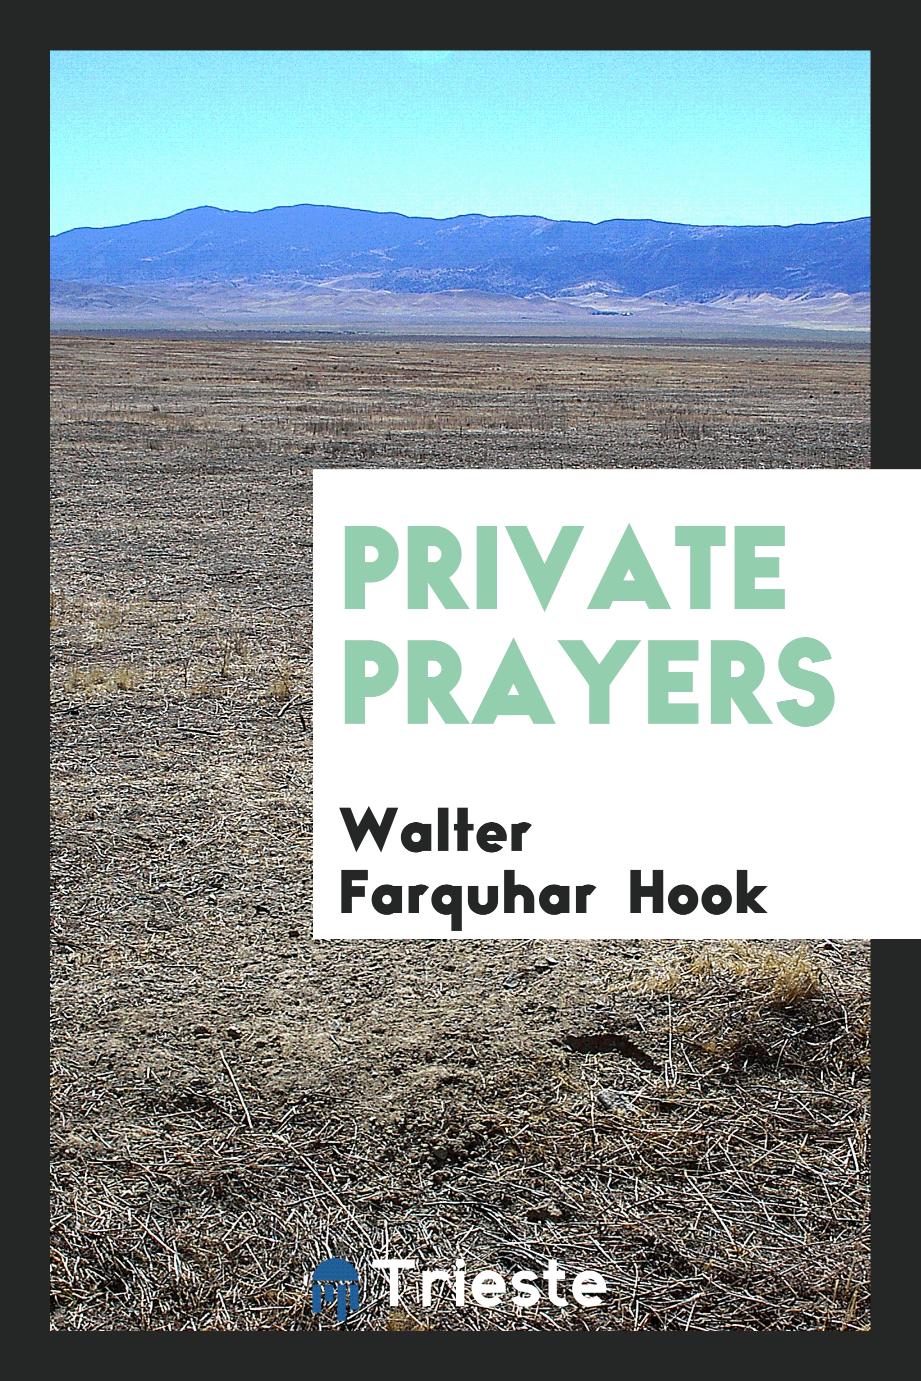 Private prayers